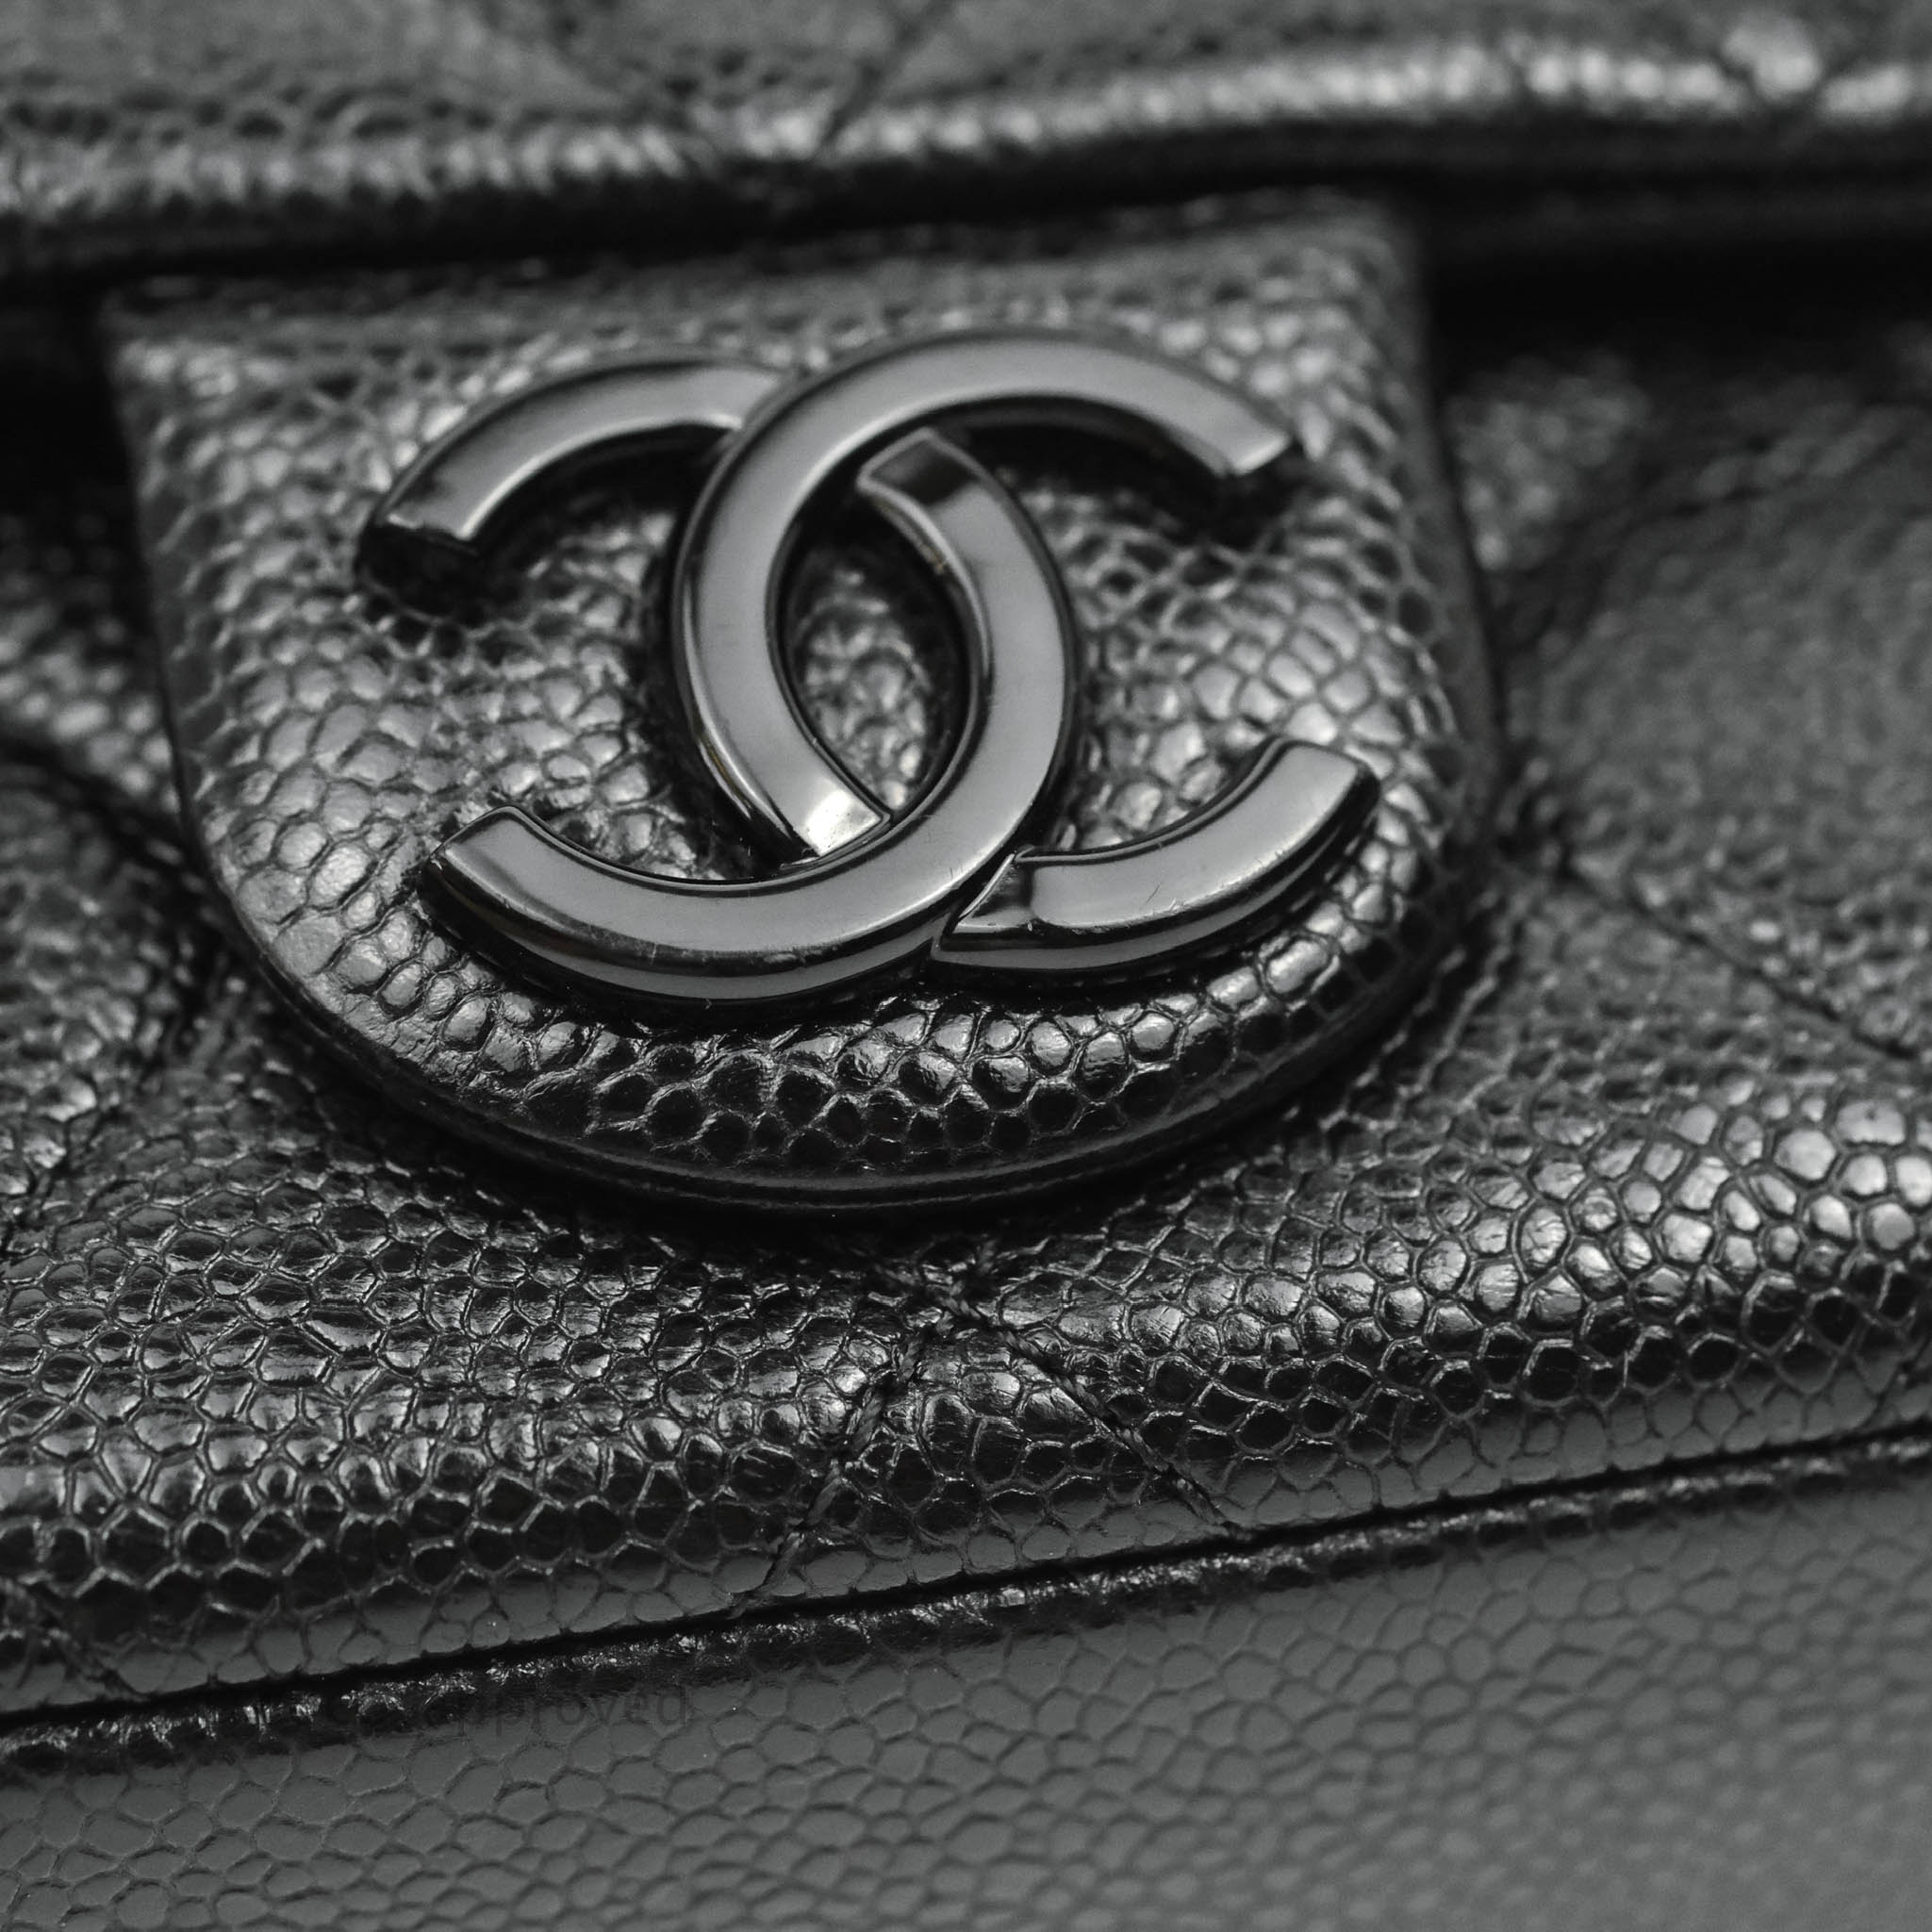 Chanel 'So Black' Mini Classic Flap Bag